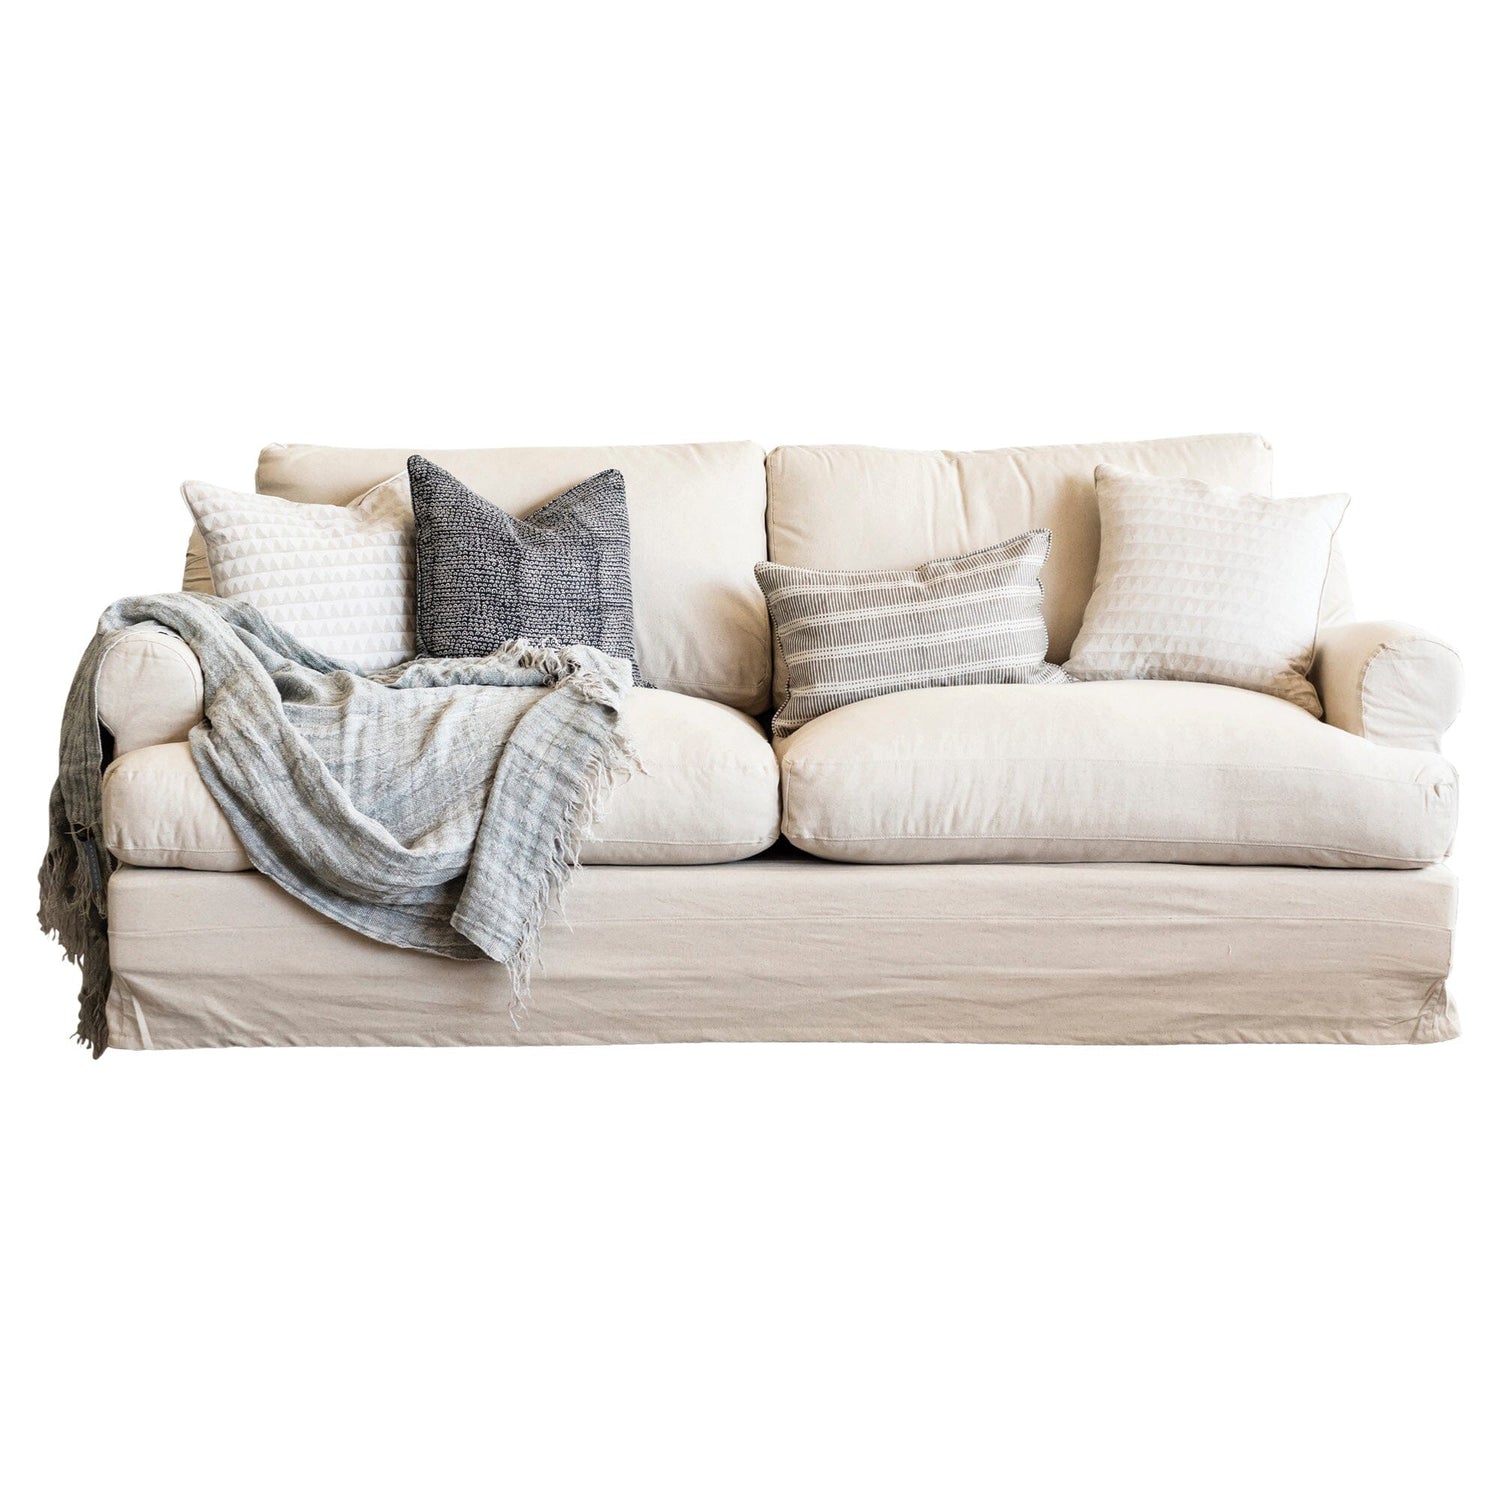 Balmoral Sofa - 3 Seater Living Furniture Beachwood Designs Salt &amp; Pepper Linen Cotton 